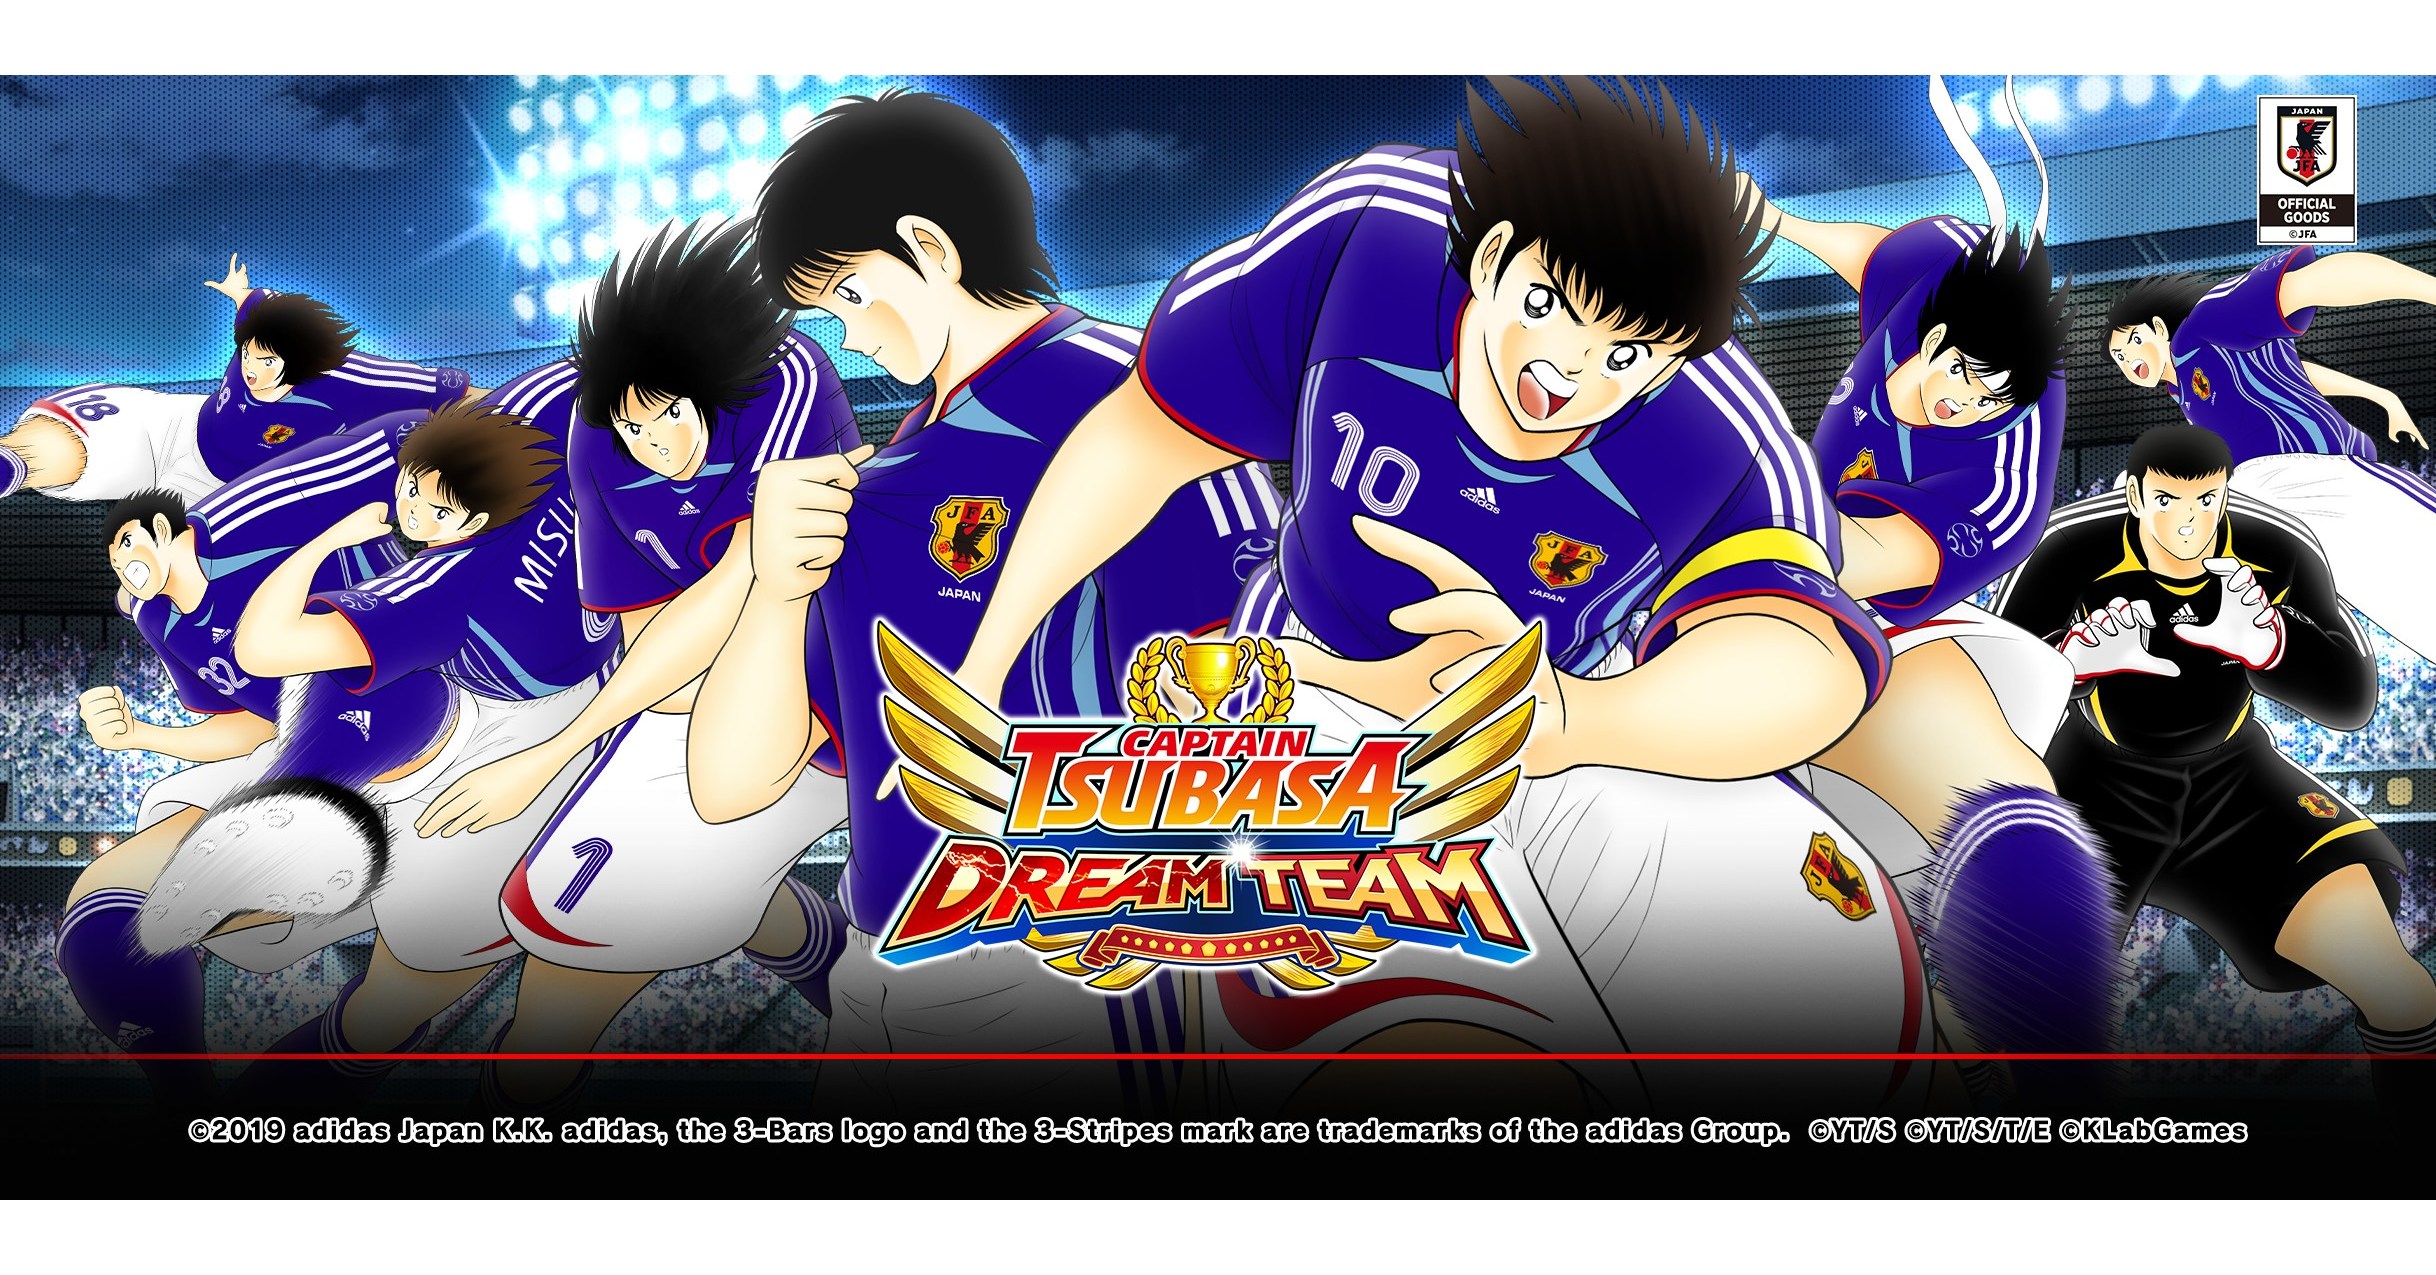 Captain Tsubasa Dream Team Worldwide Release 2nd Anniversary Starts Today